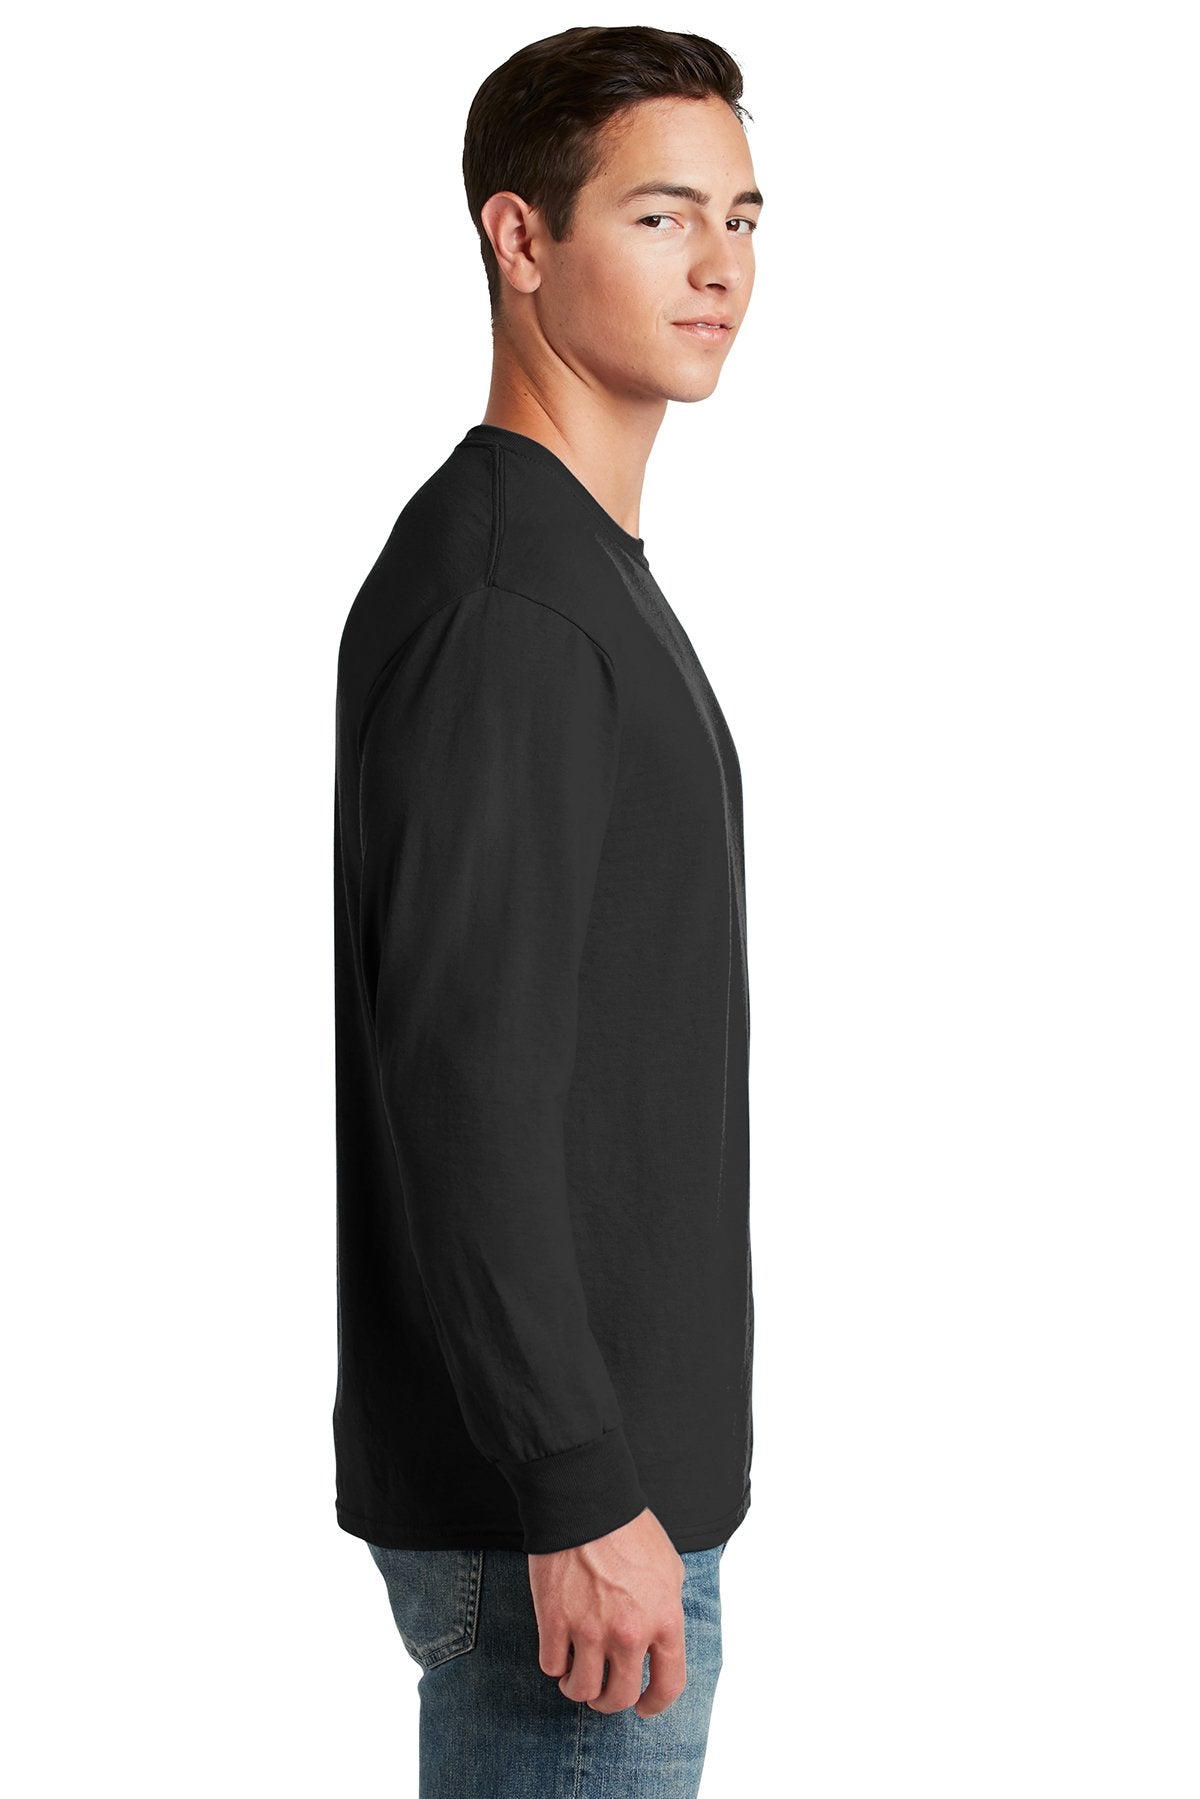 Jerzees Dri-Power 50/50 Cotton/Poly Long Sleeve T-Shirt 29LS Black